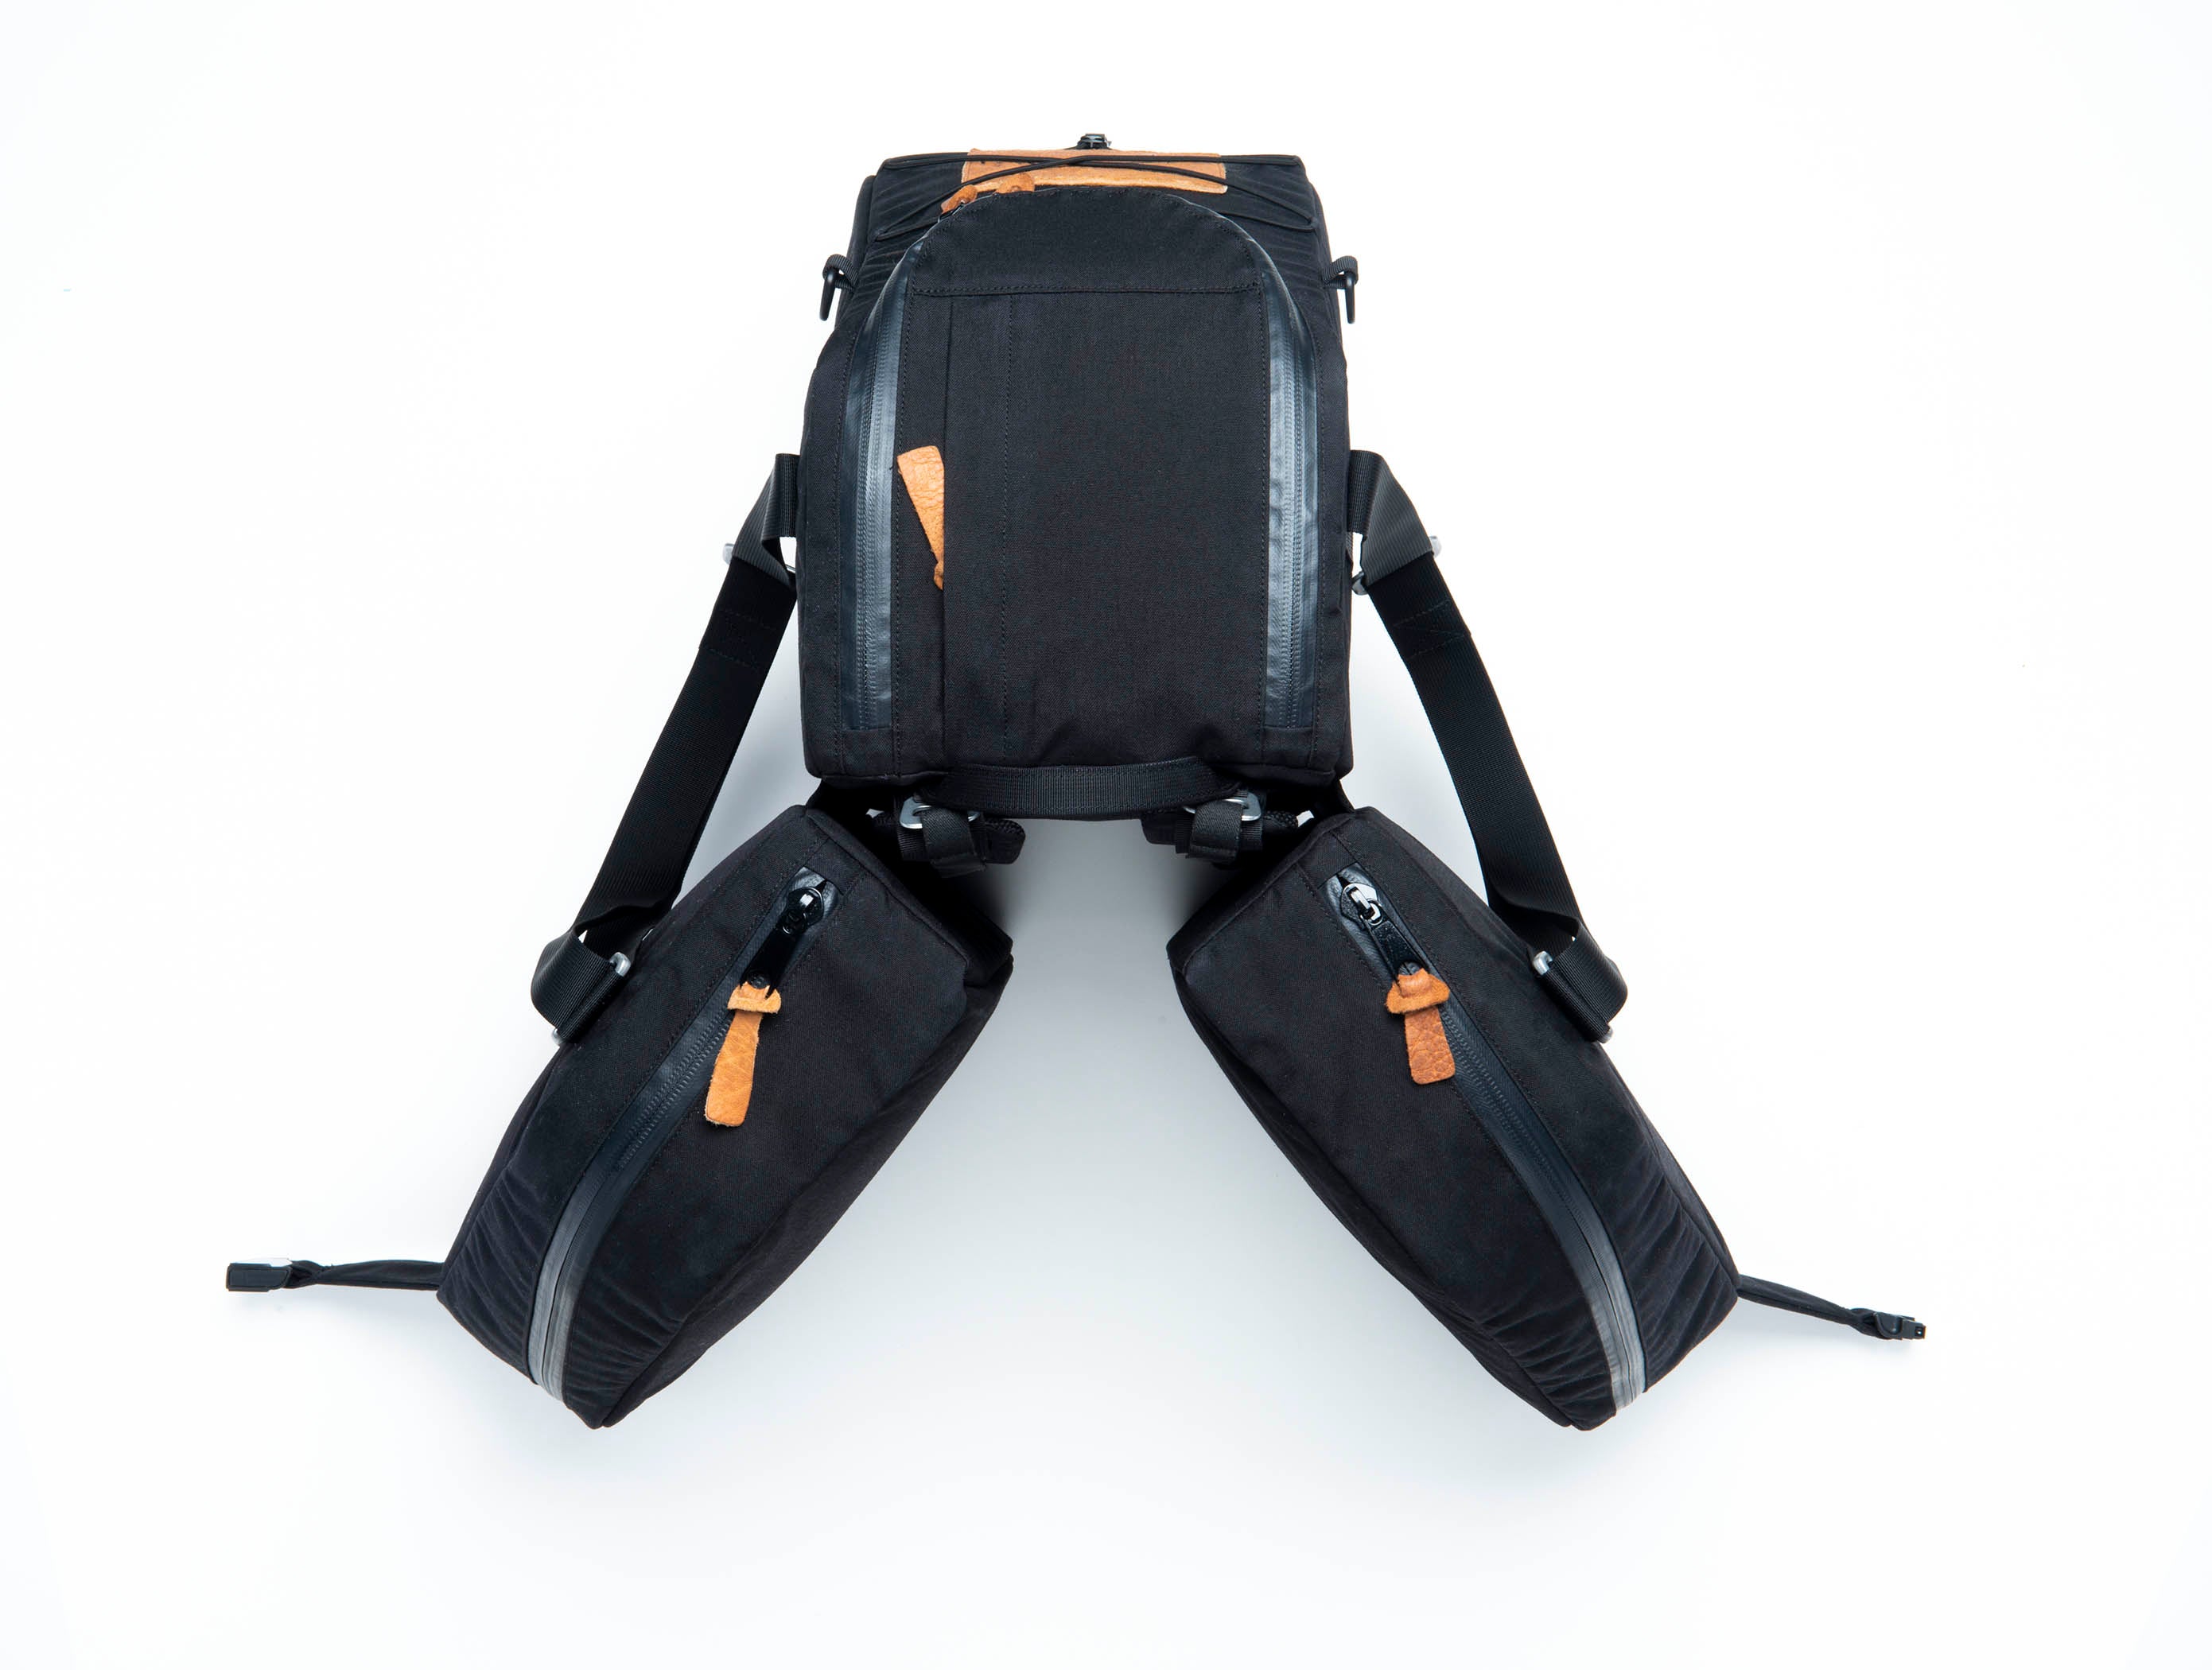 Utility Boot Backpack Large Graphite/Heather - Ski Center LTD